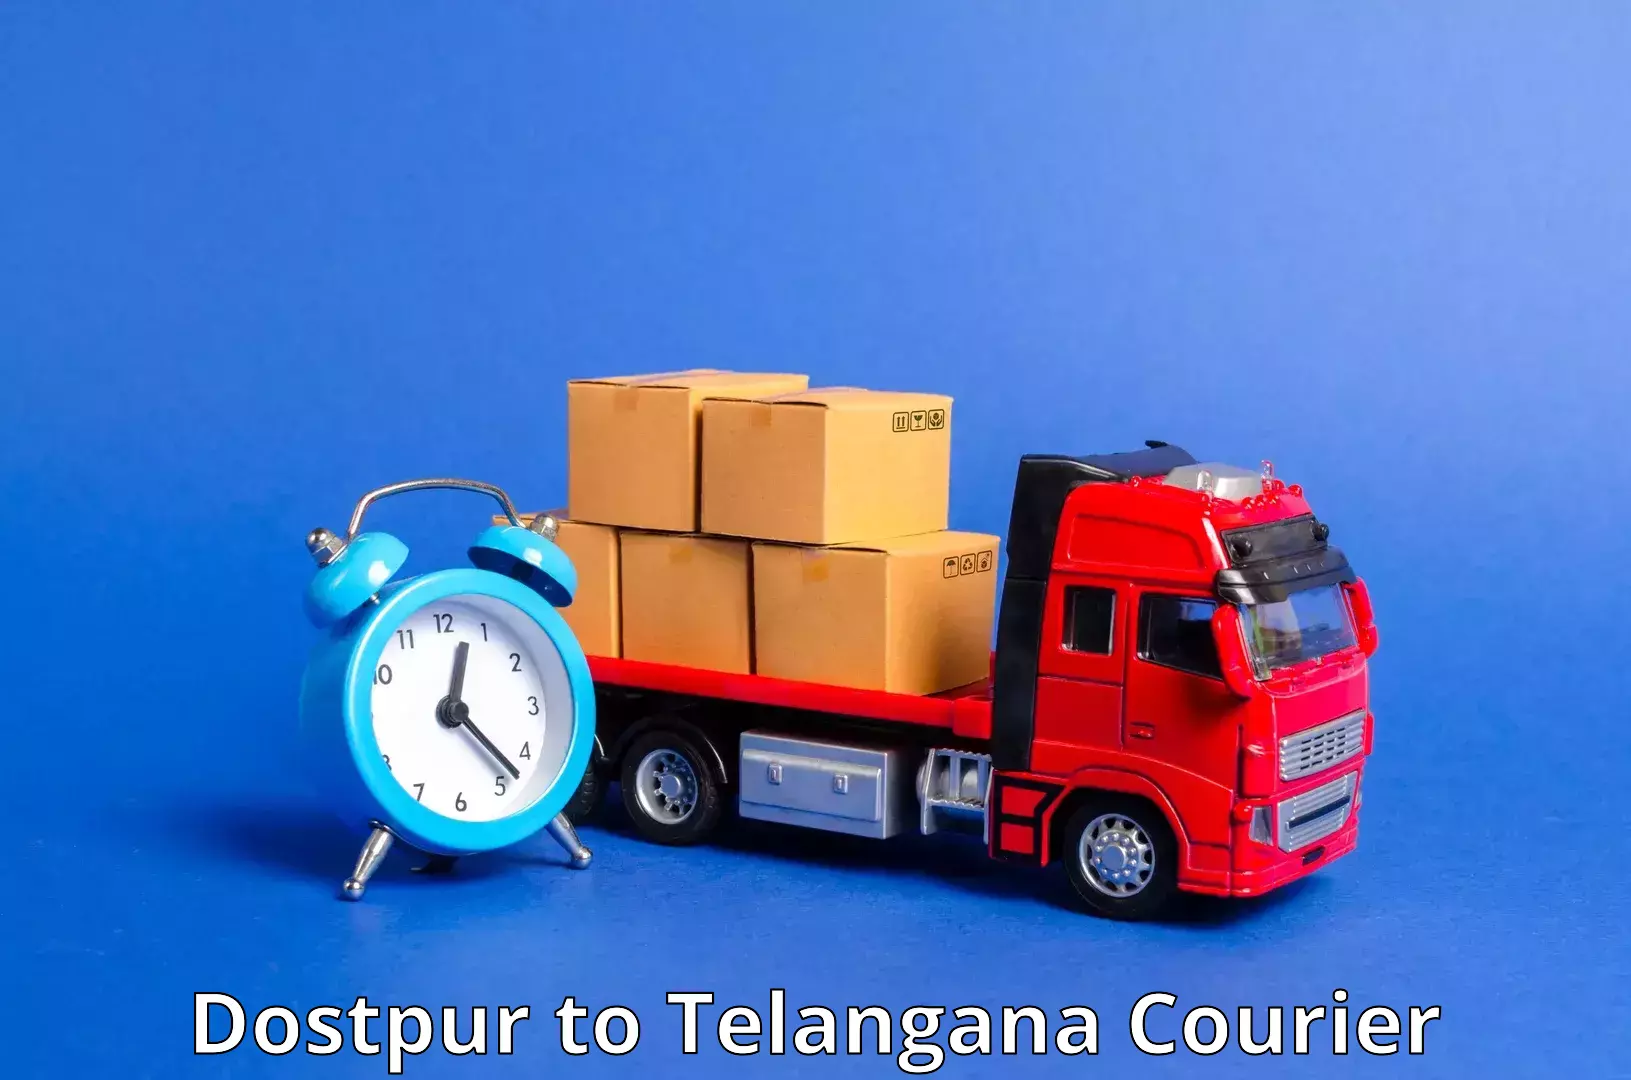 Urban courier service Dostpur to Ramannapeta